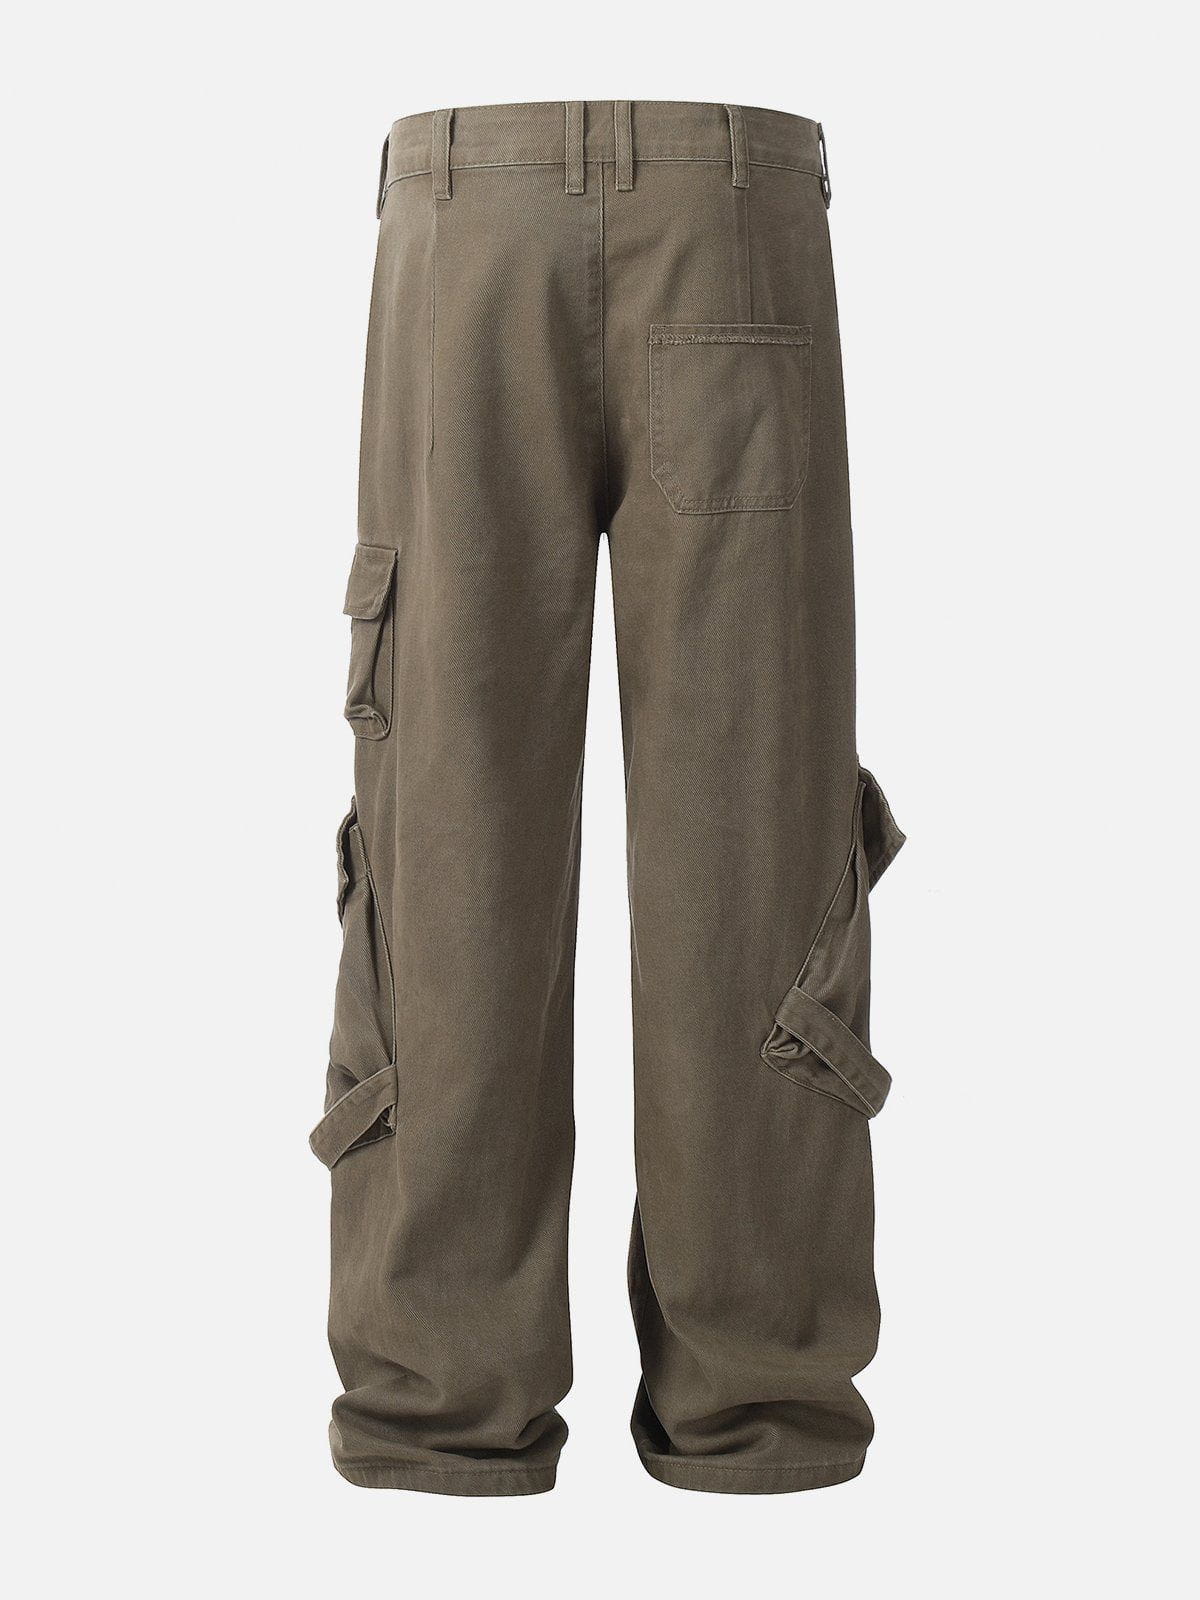 Aelfric Eden Belt Multi Pocket Cargo Pants